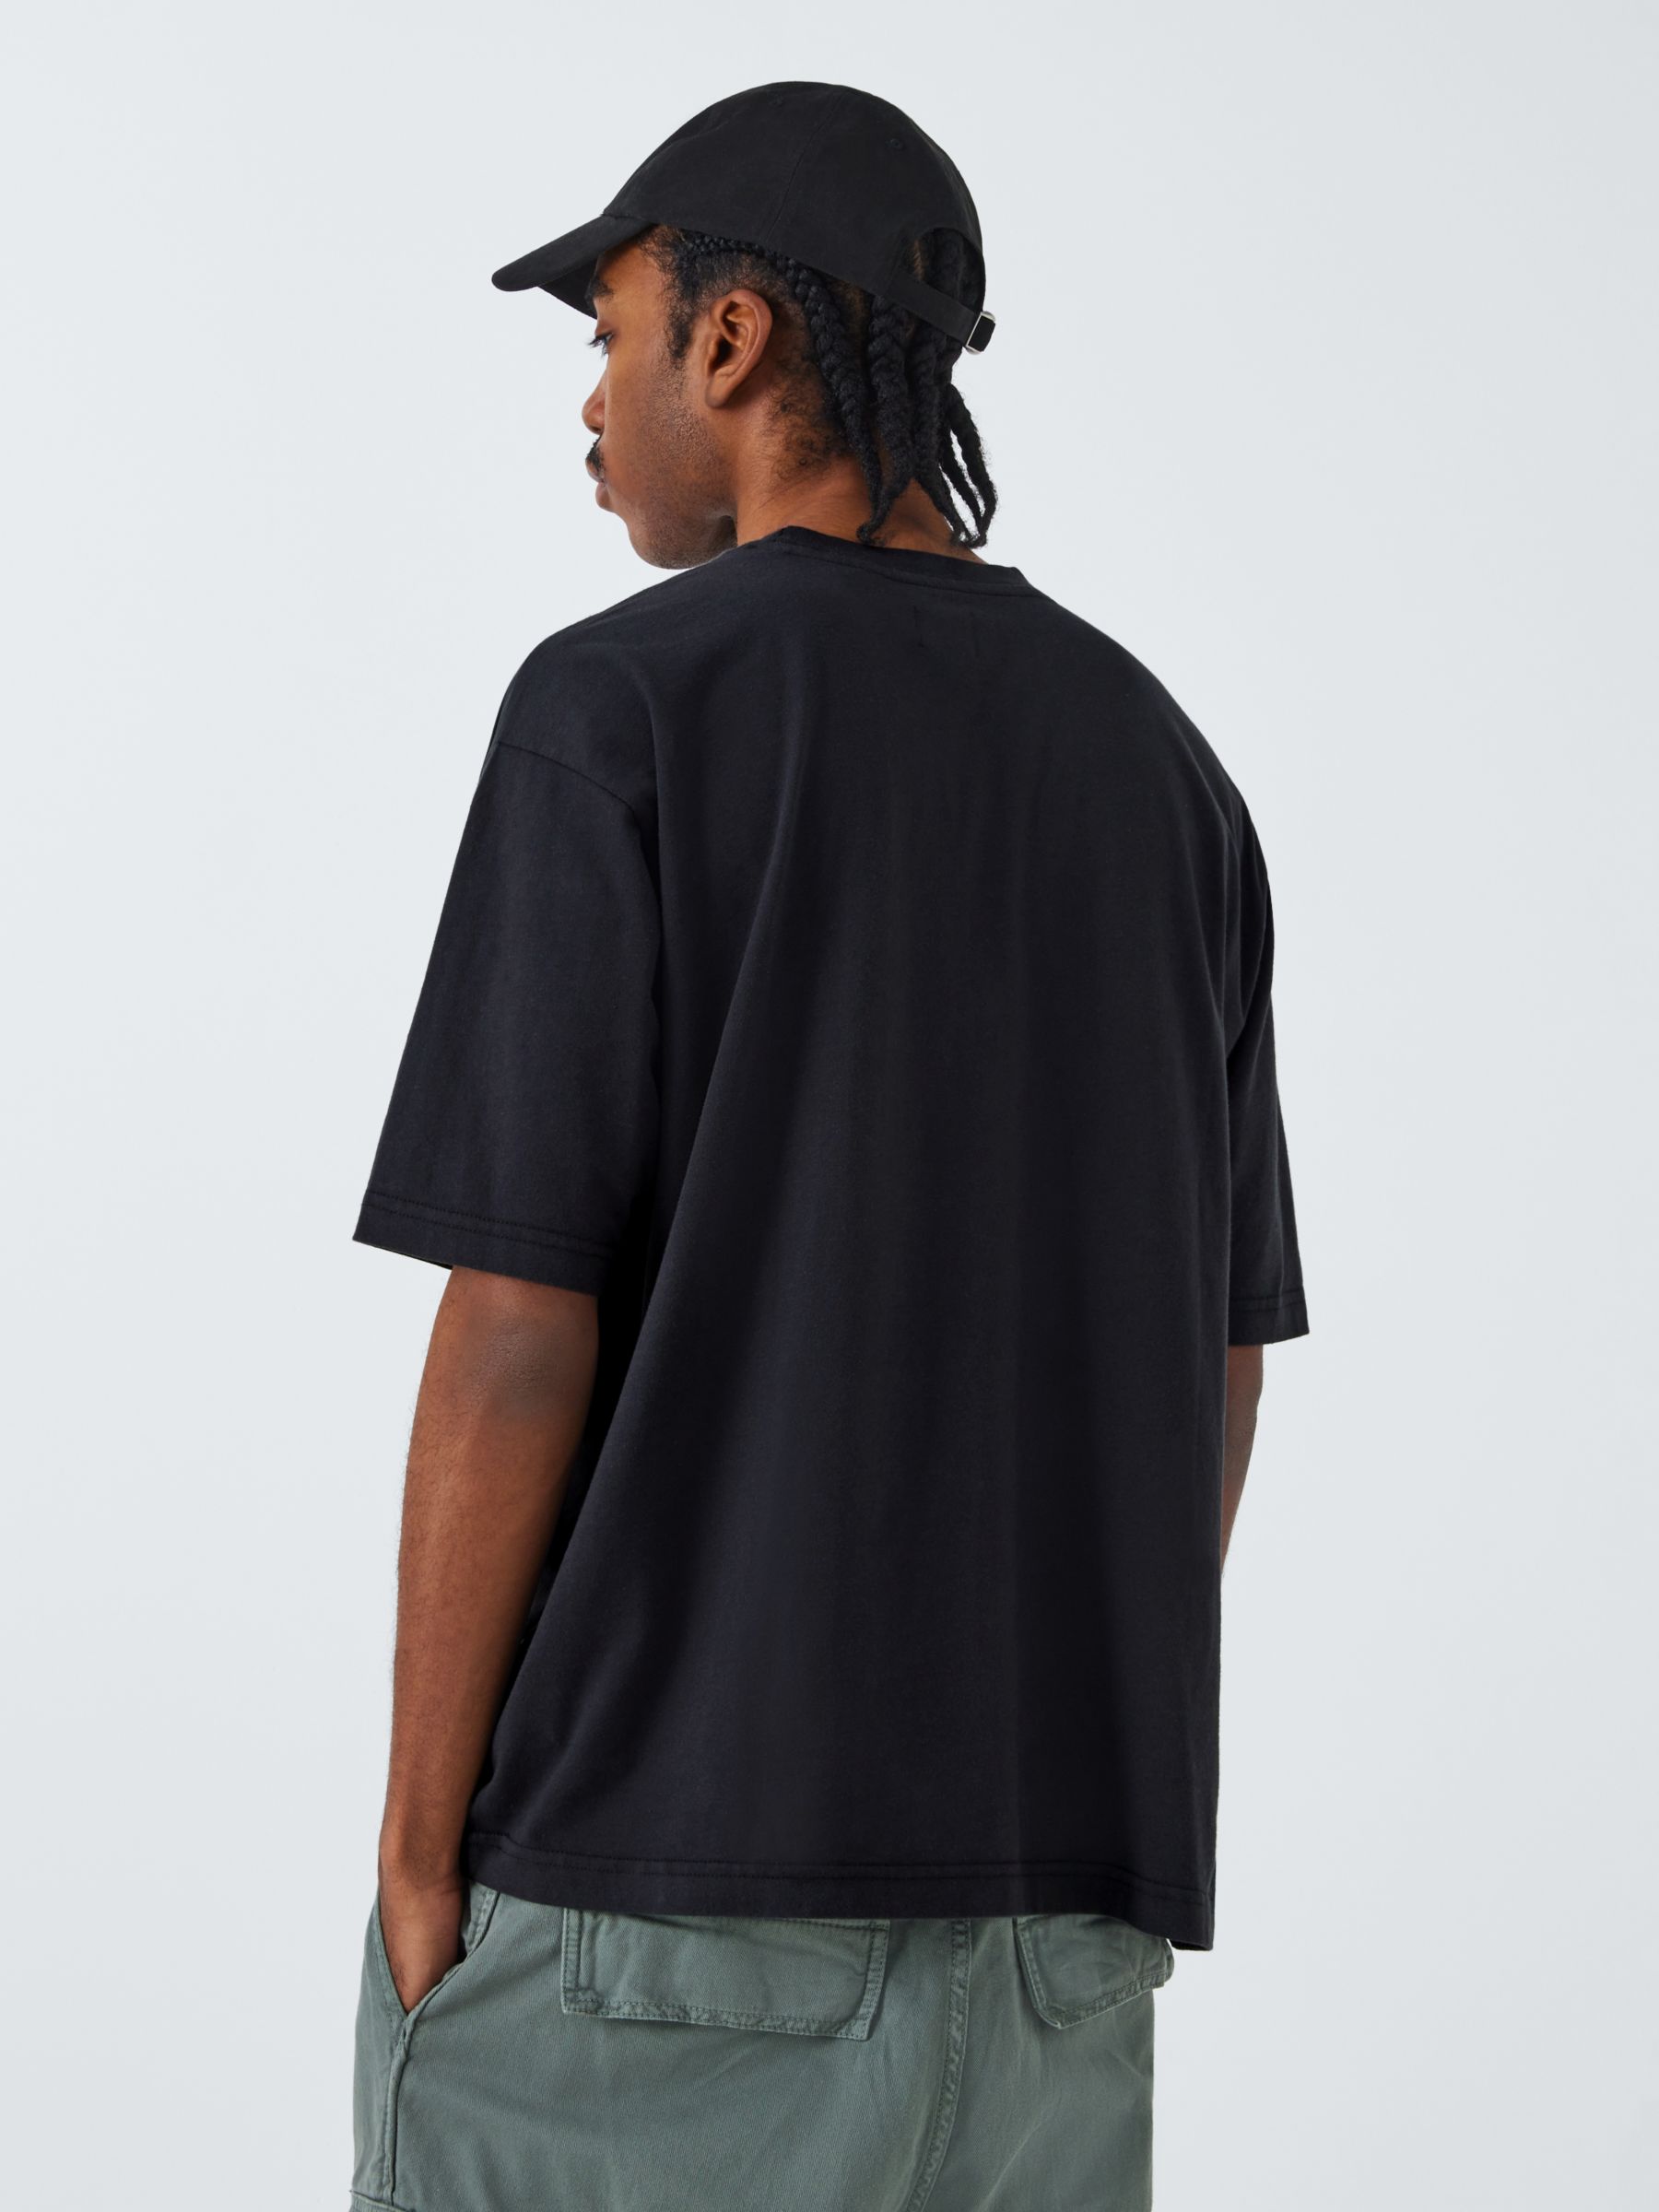 Levi's Skate Graph T-Shirt, Black, S